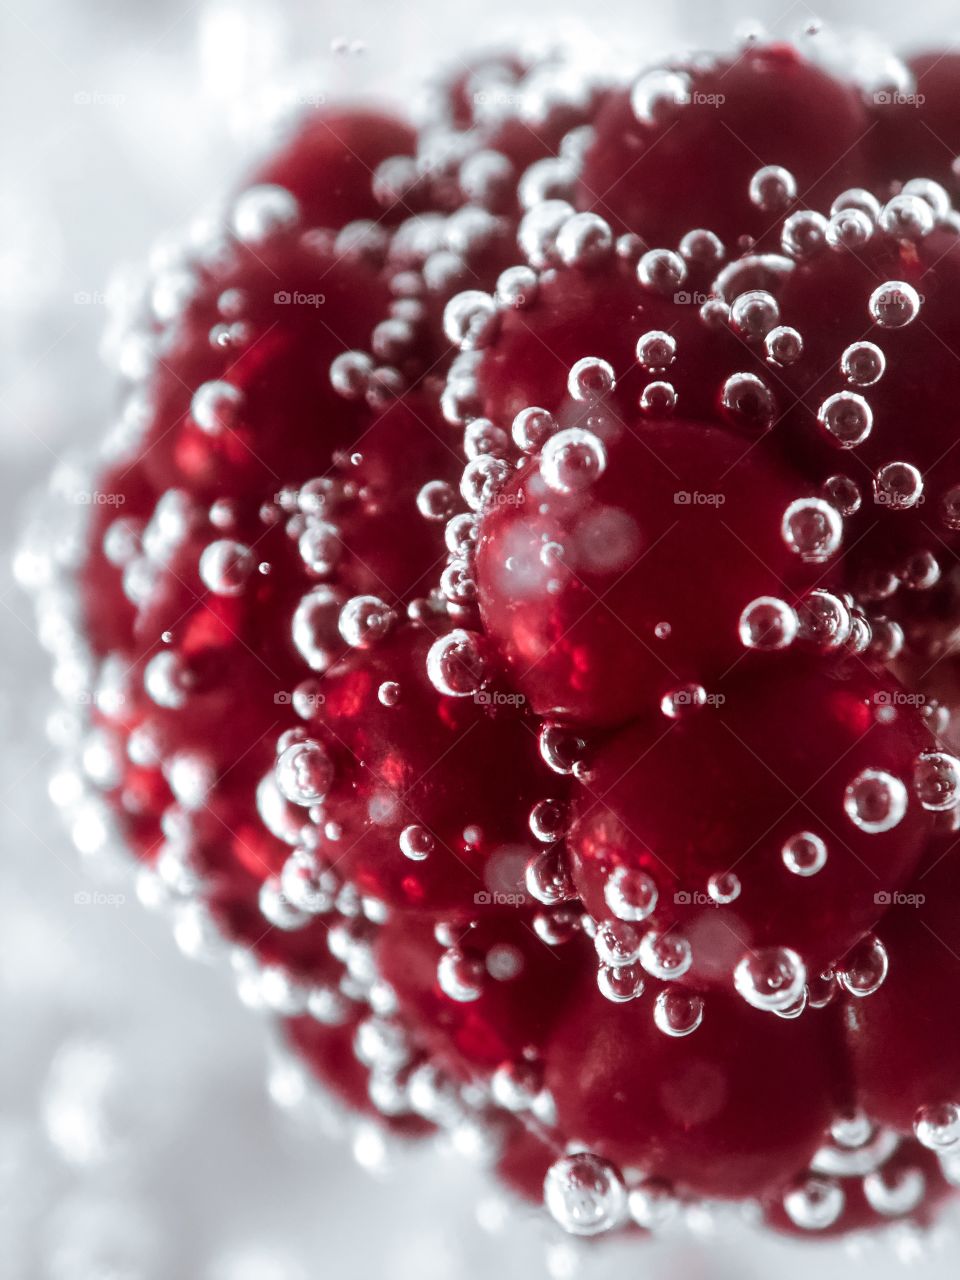 blackberry in the bubbles 